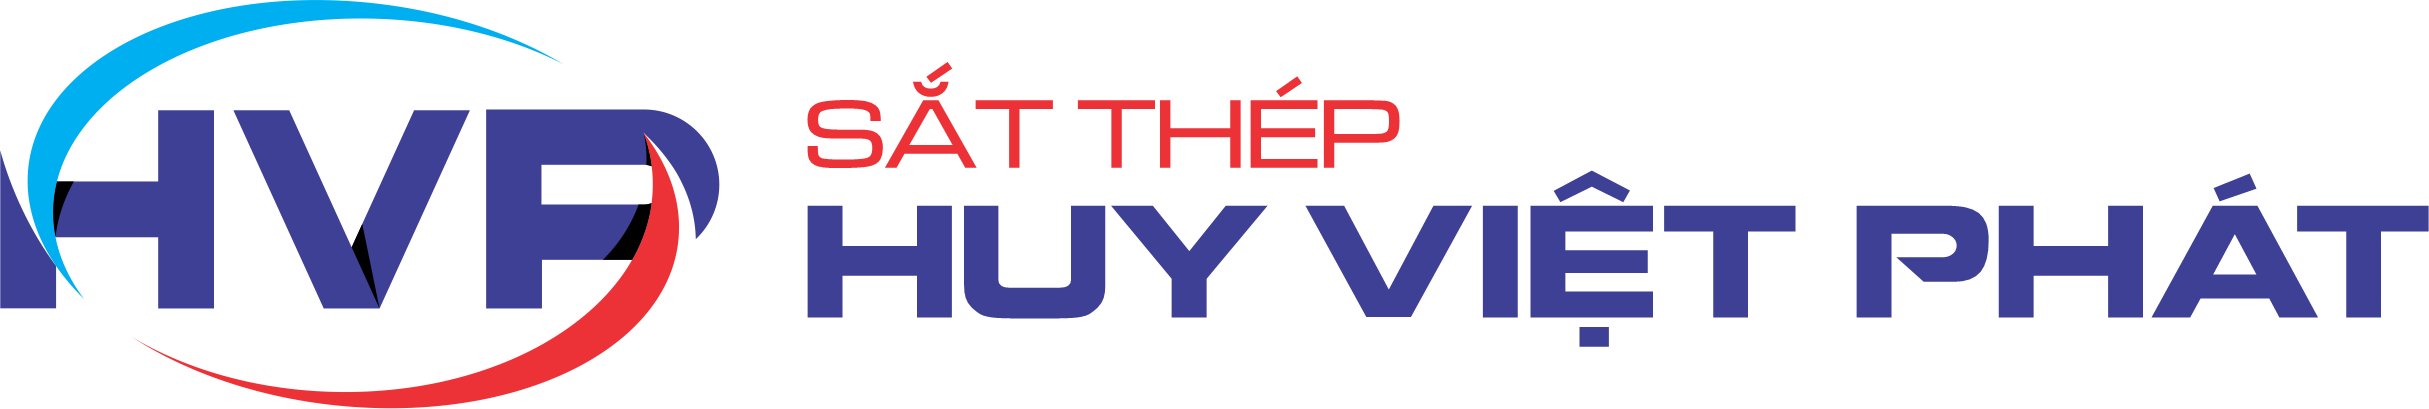 logo web HVP